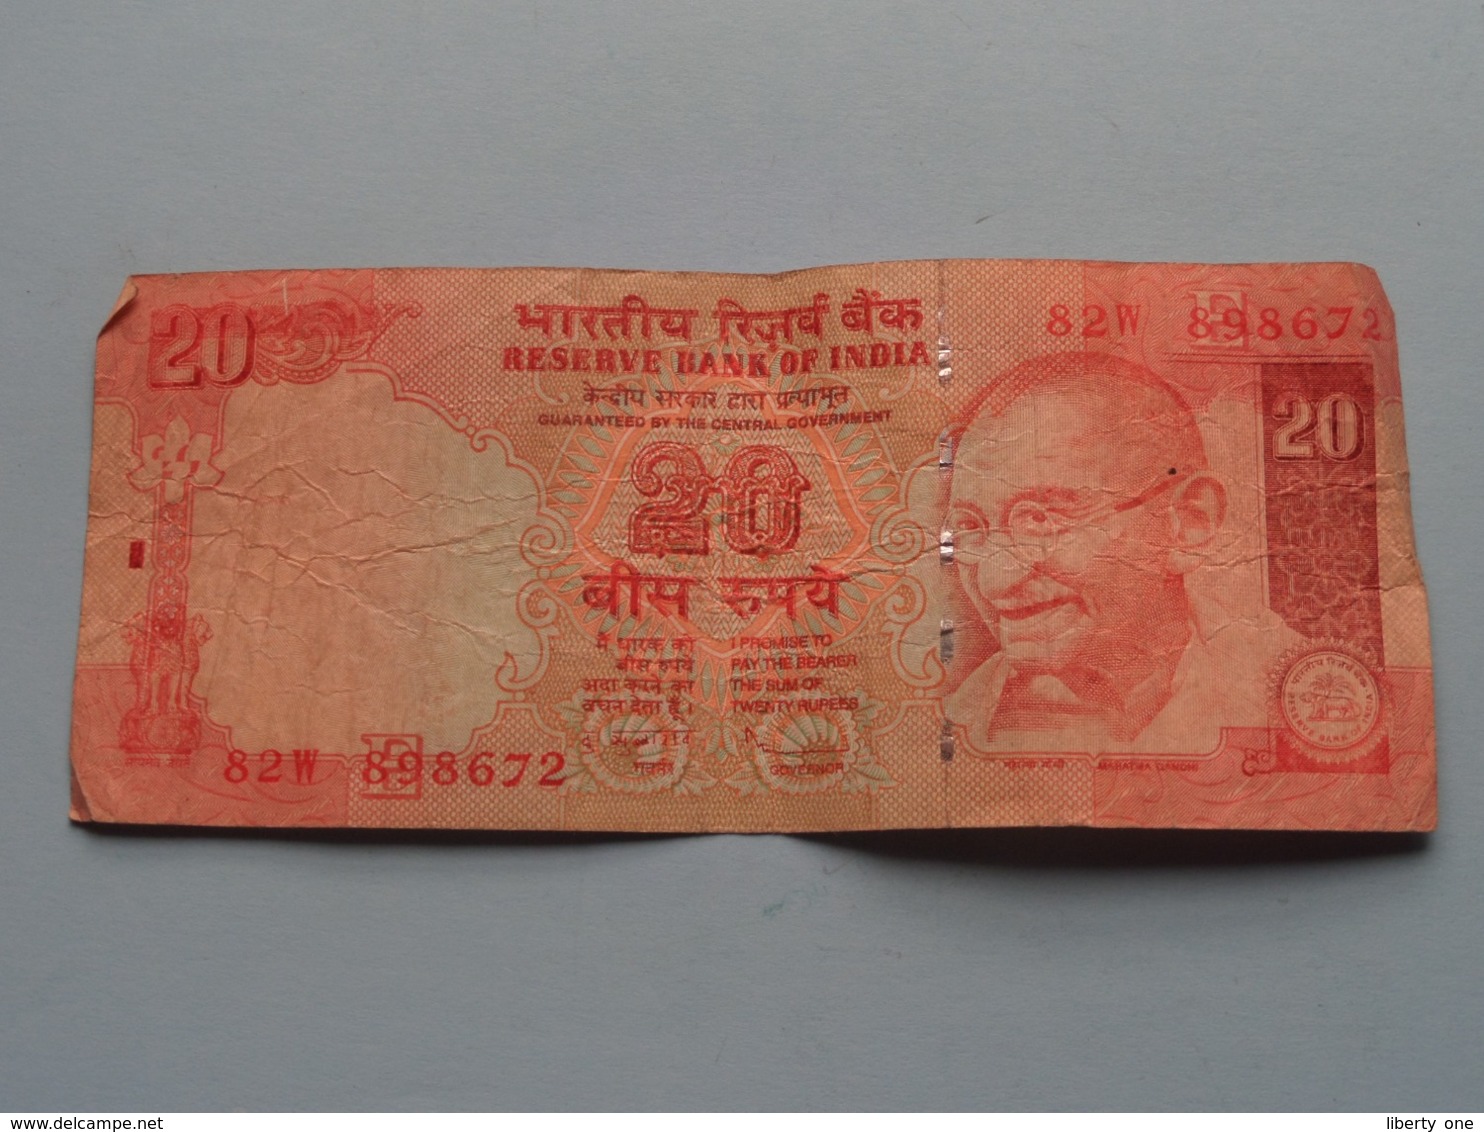 20 ( Twenty ) RUPEES : 82W 898672 ( Reserve Bank Of India ) ! - India